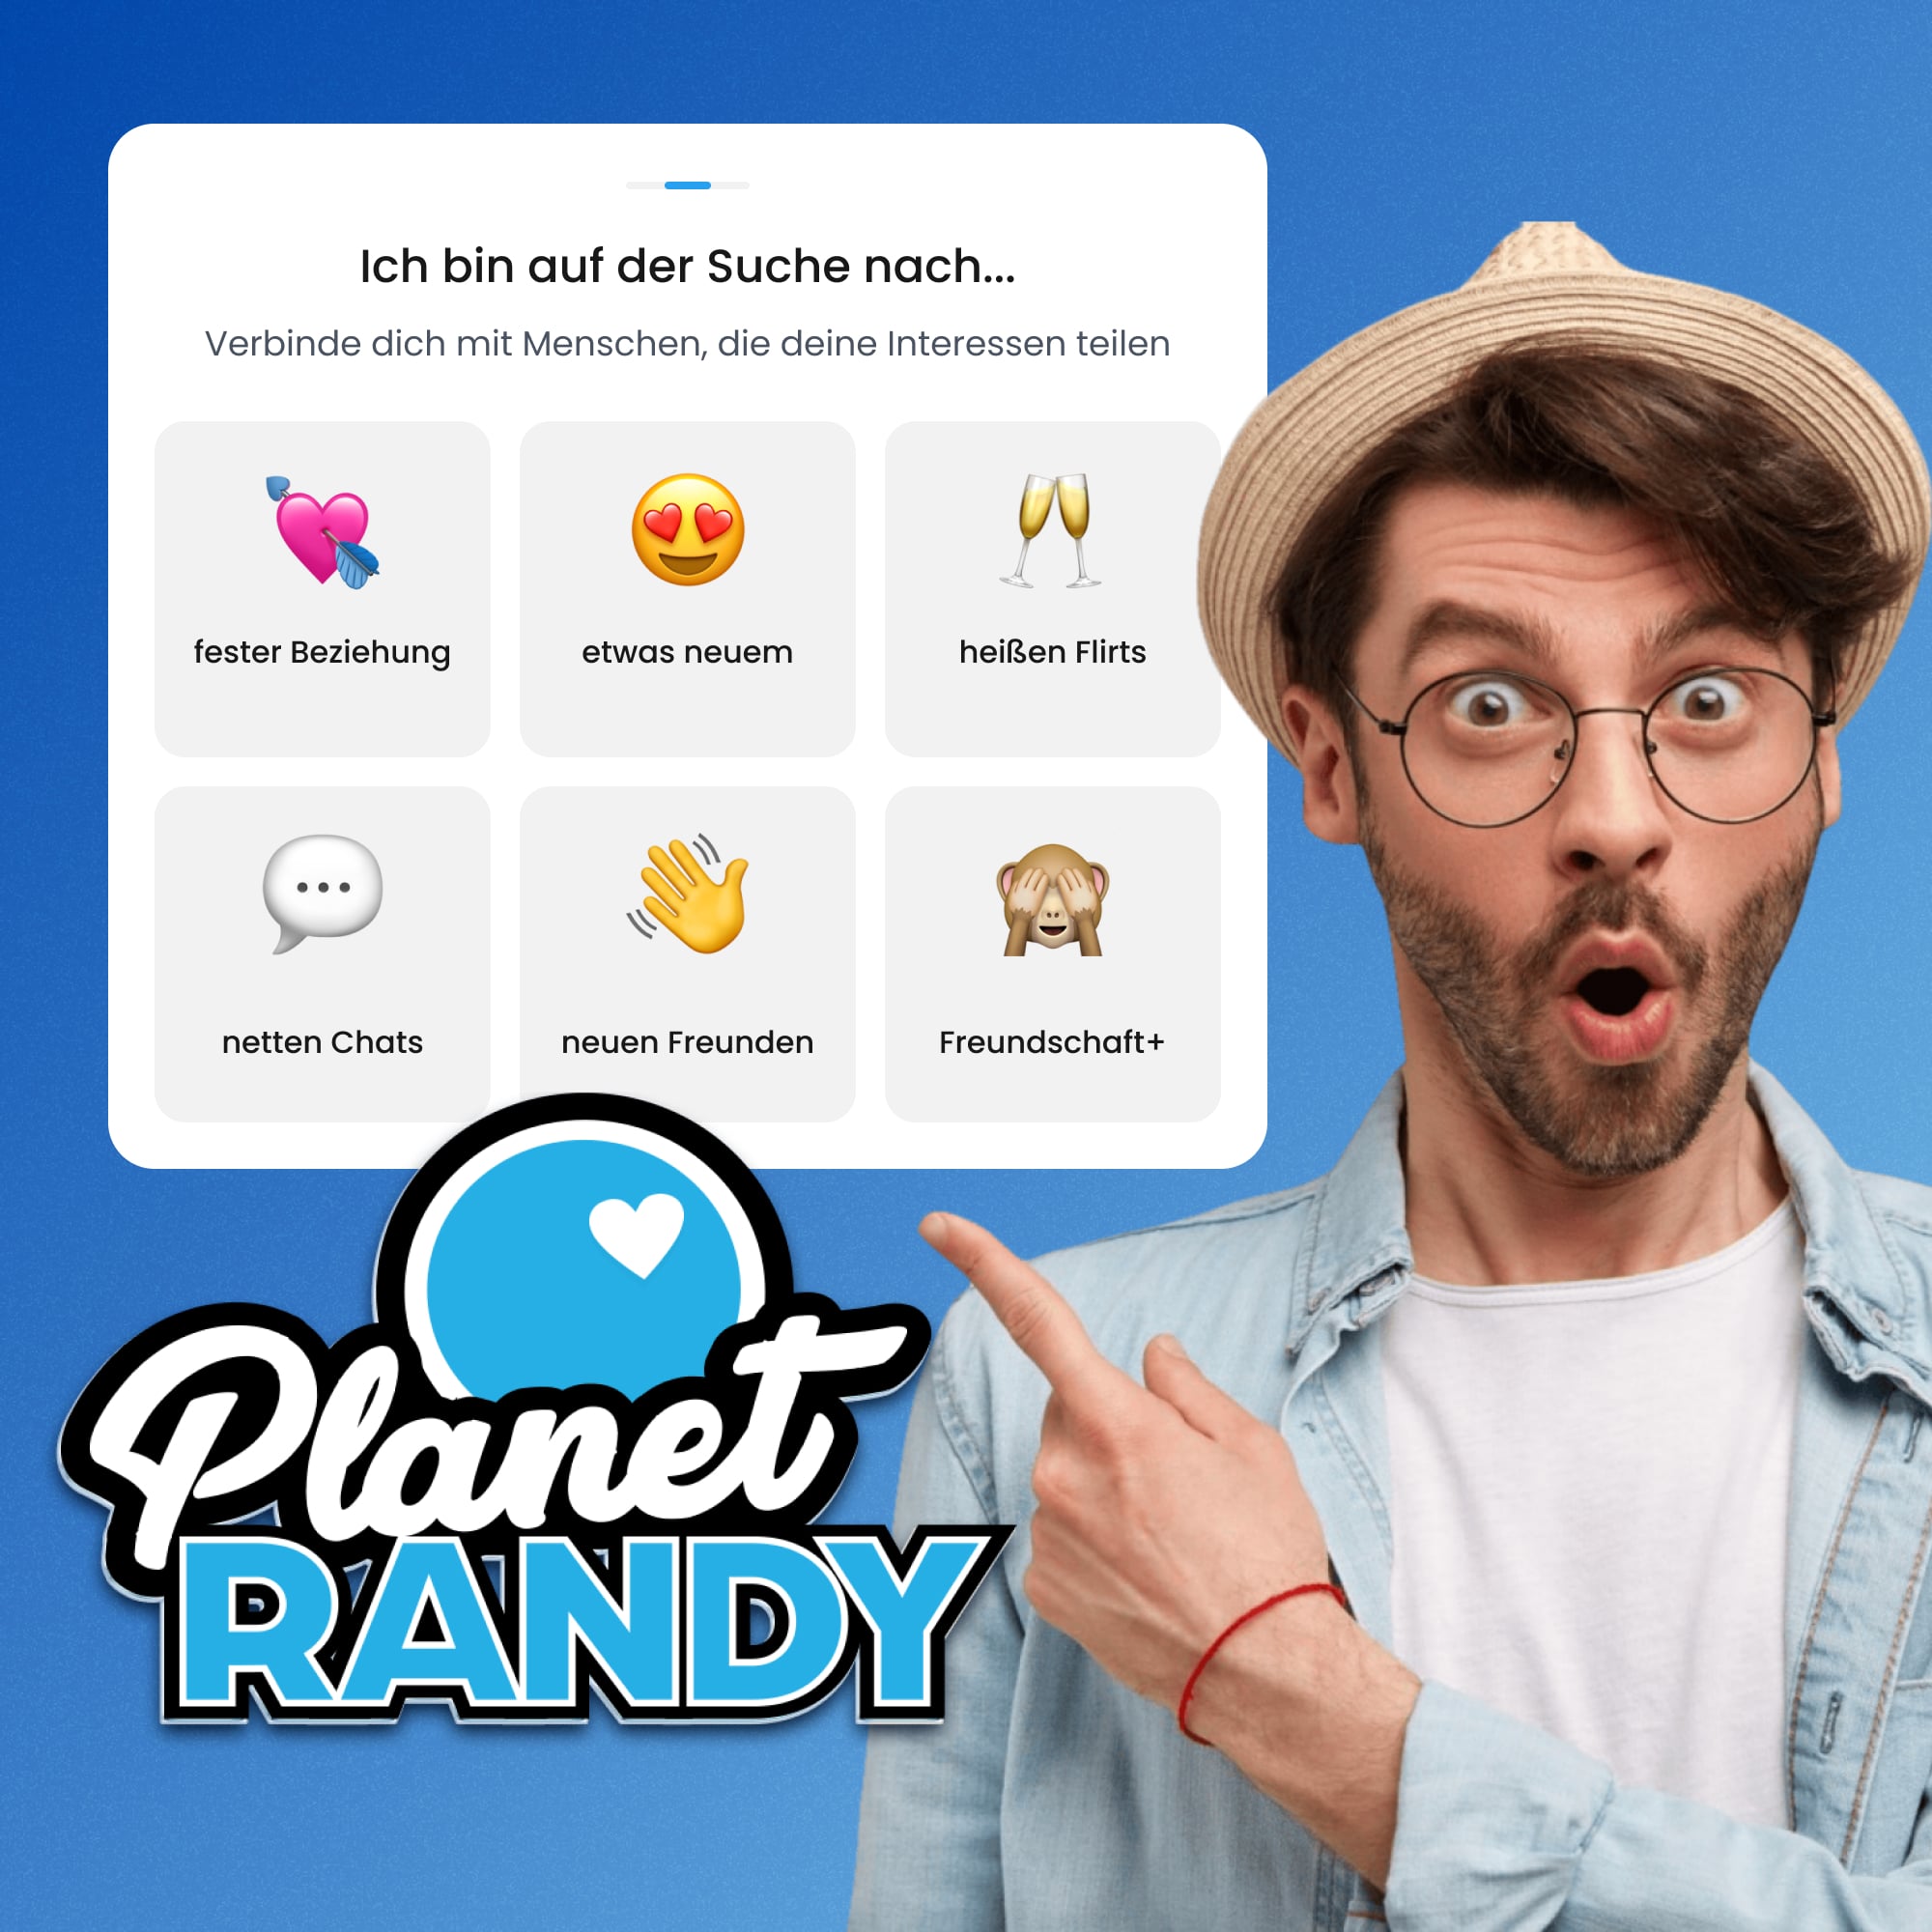 Planet Randy - Suche